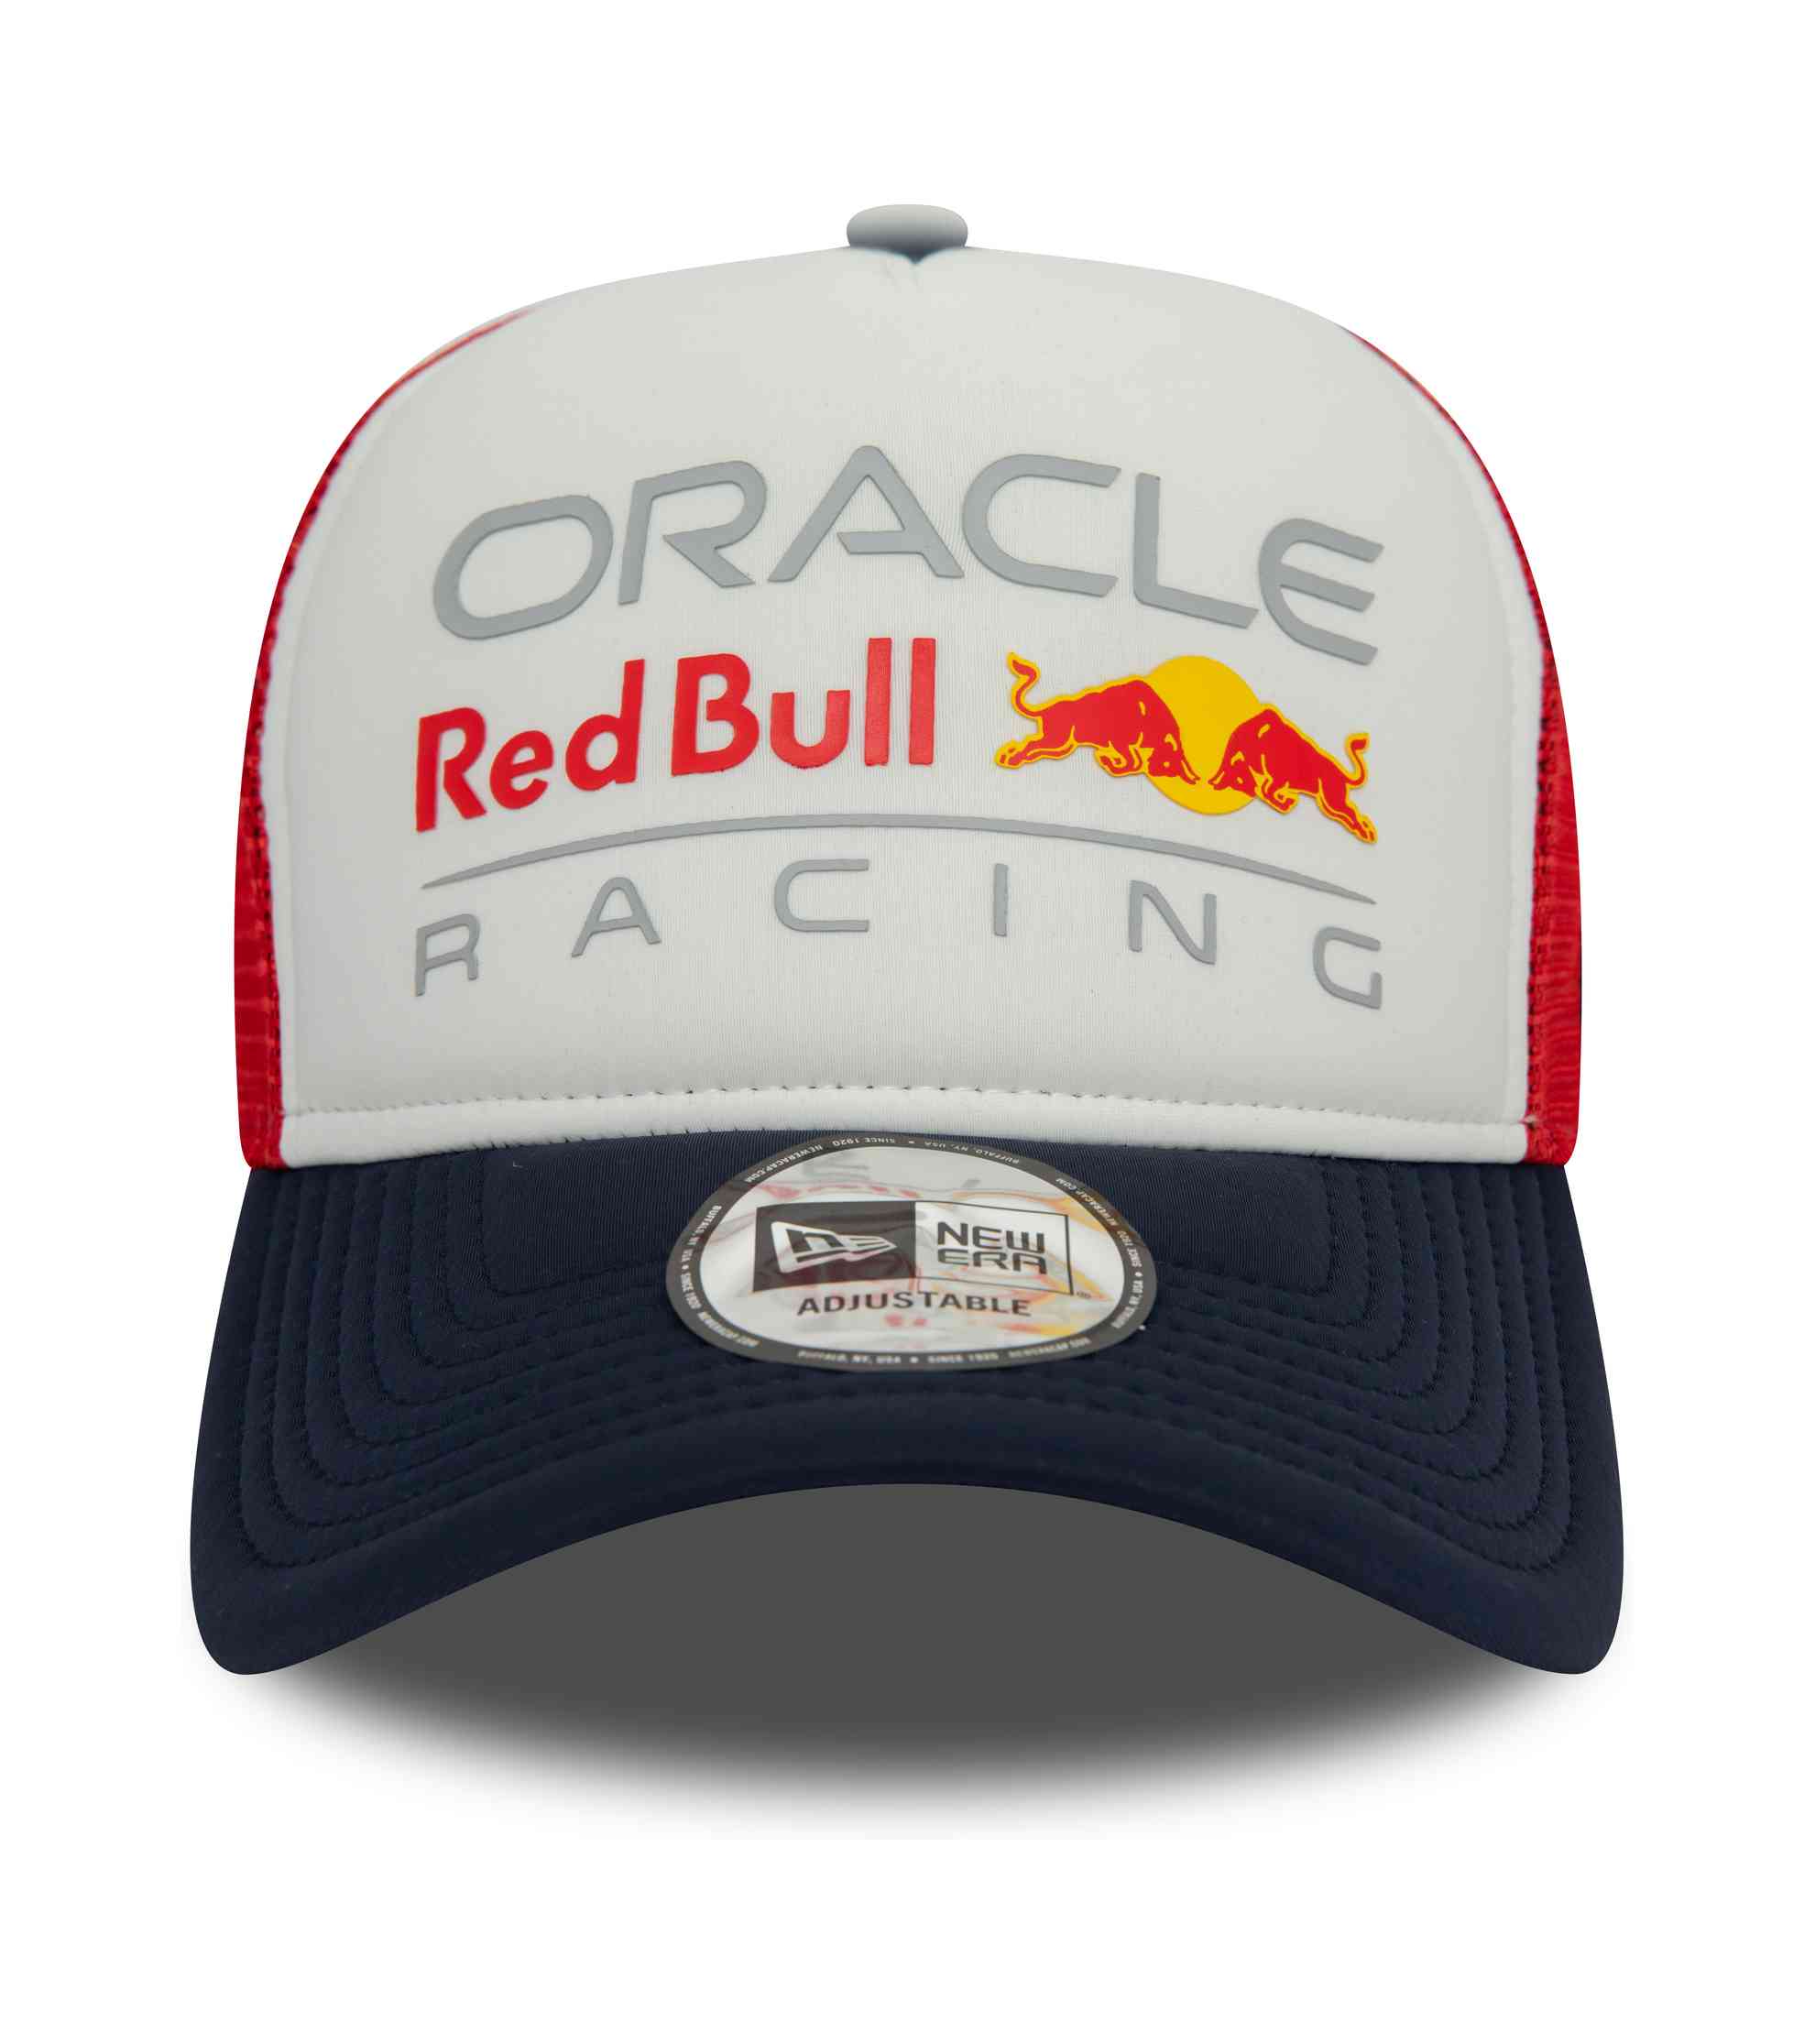 New Era - Oracle Red Bull Racing Color Block Trucker Snapback Cap